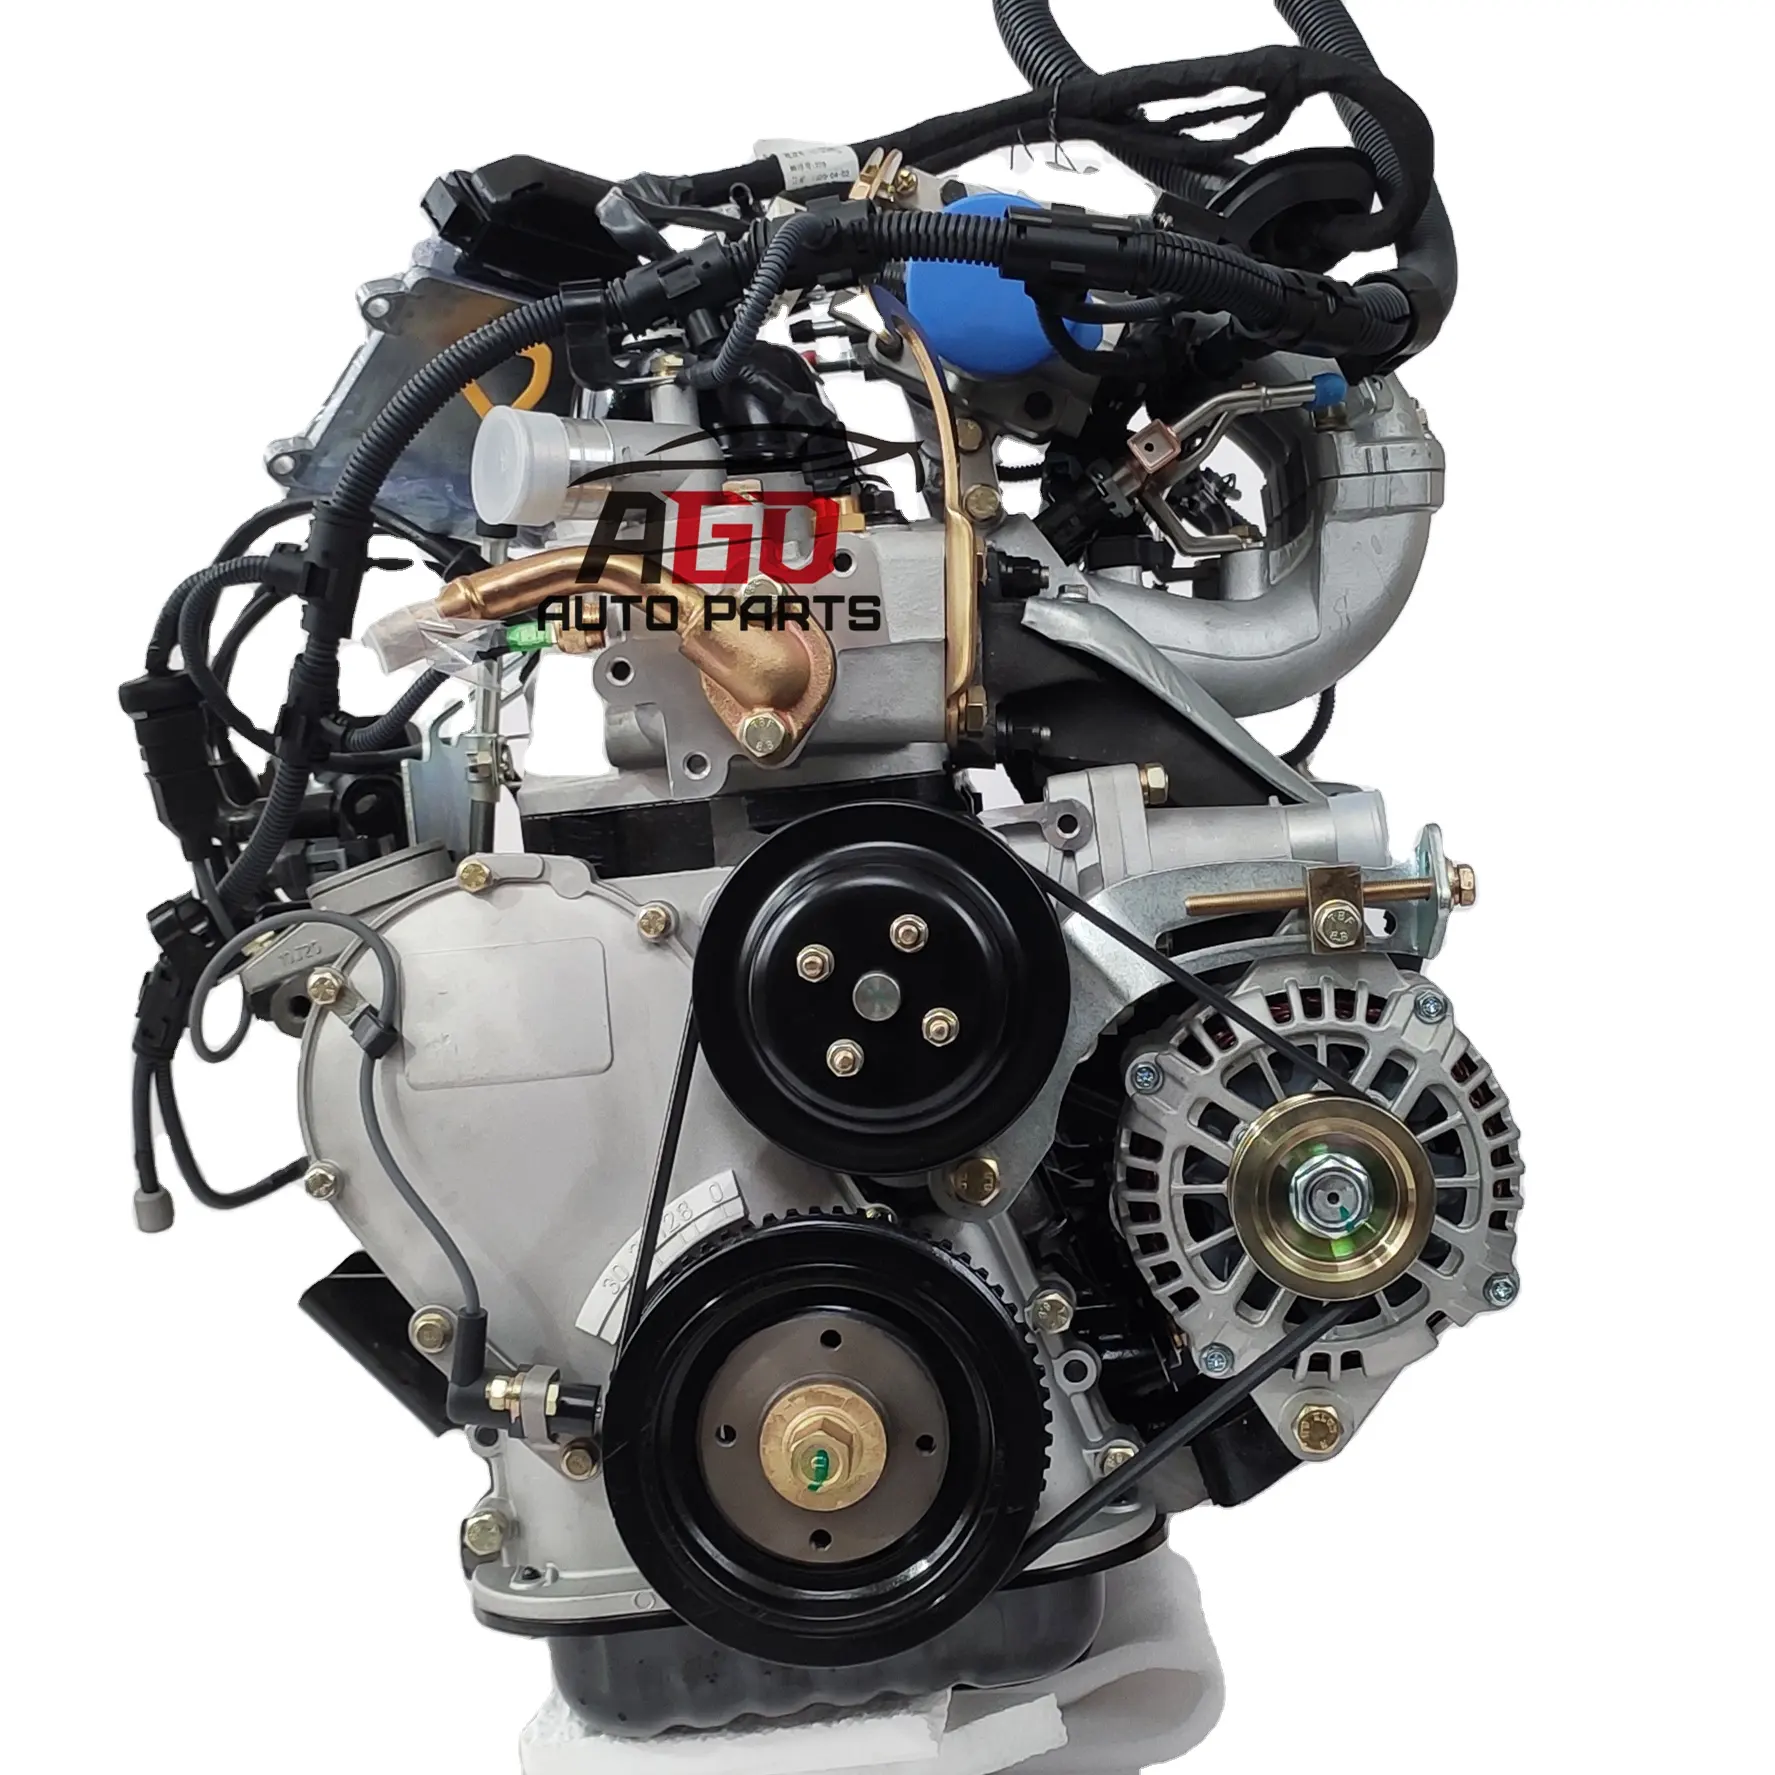 Nuevo motor 4Y EFI completo 491 conjunto de motor 2.2L con ECU para Toyota Hiace Box Wagon Dyna 200 Hilux